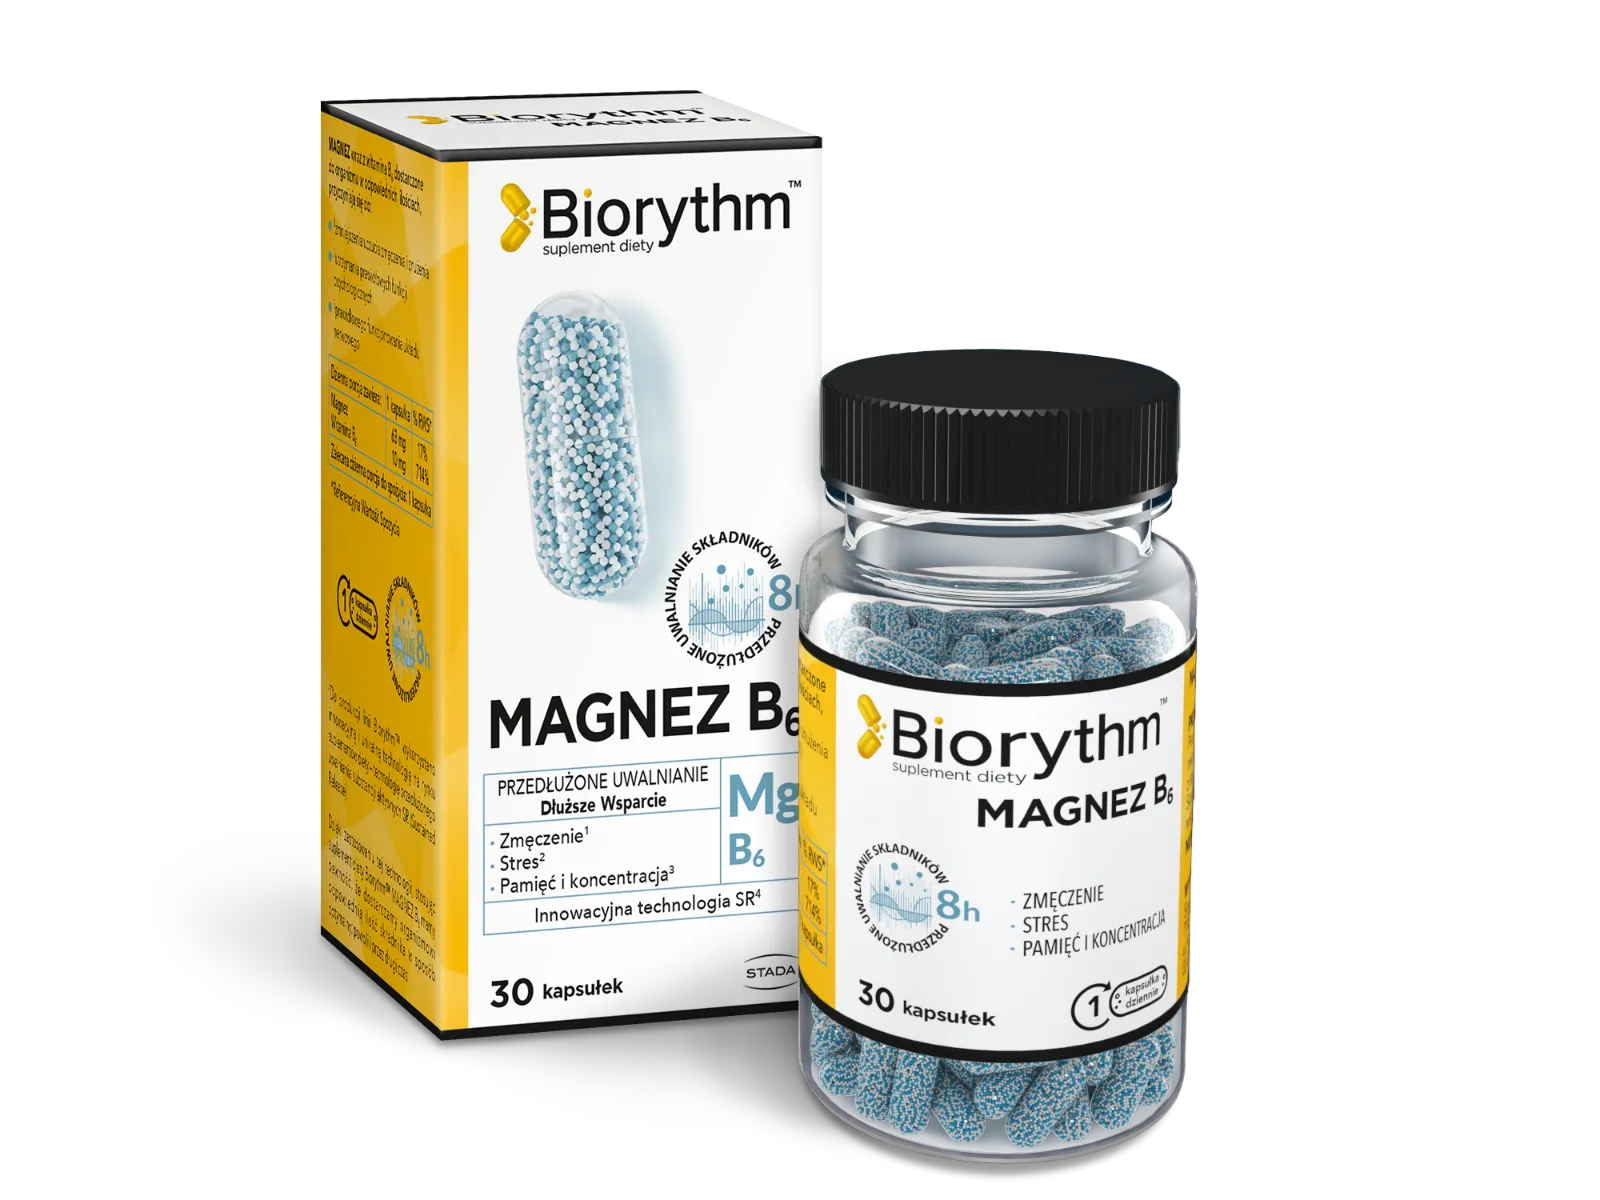 BIOrythm Magnez B6, 30 kapsułek